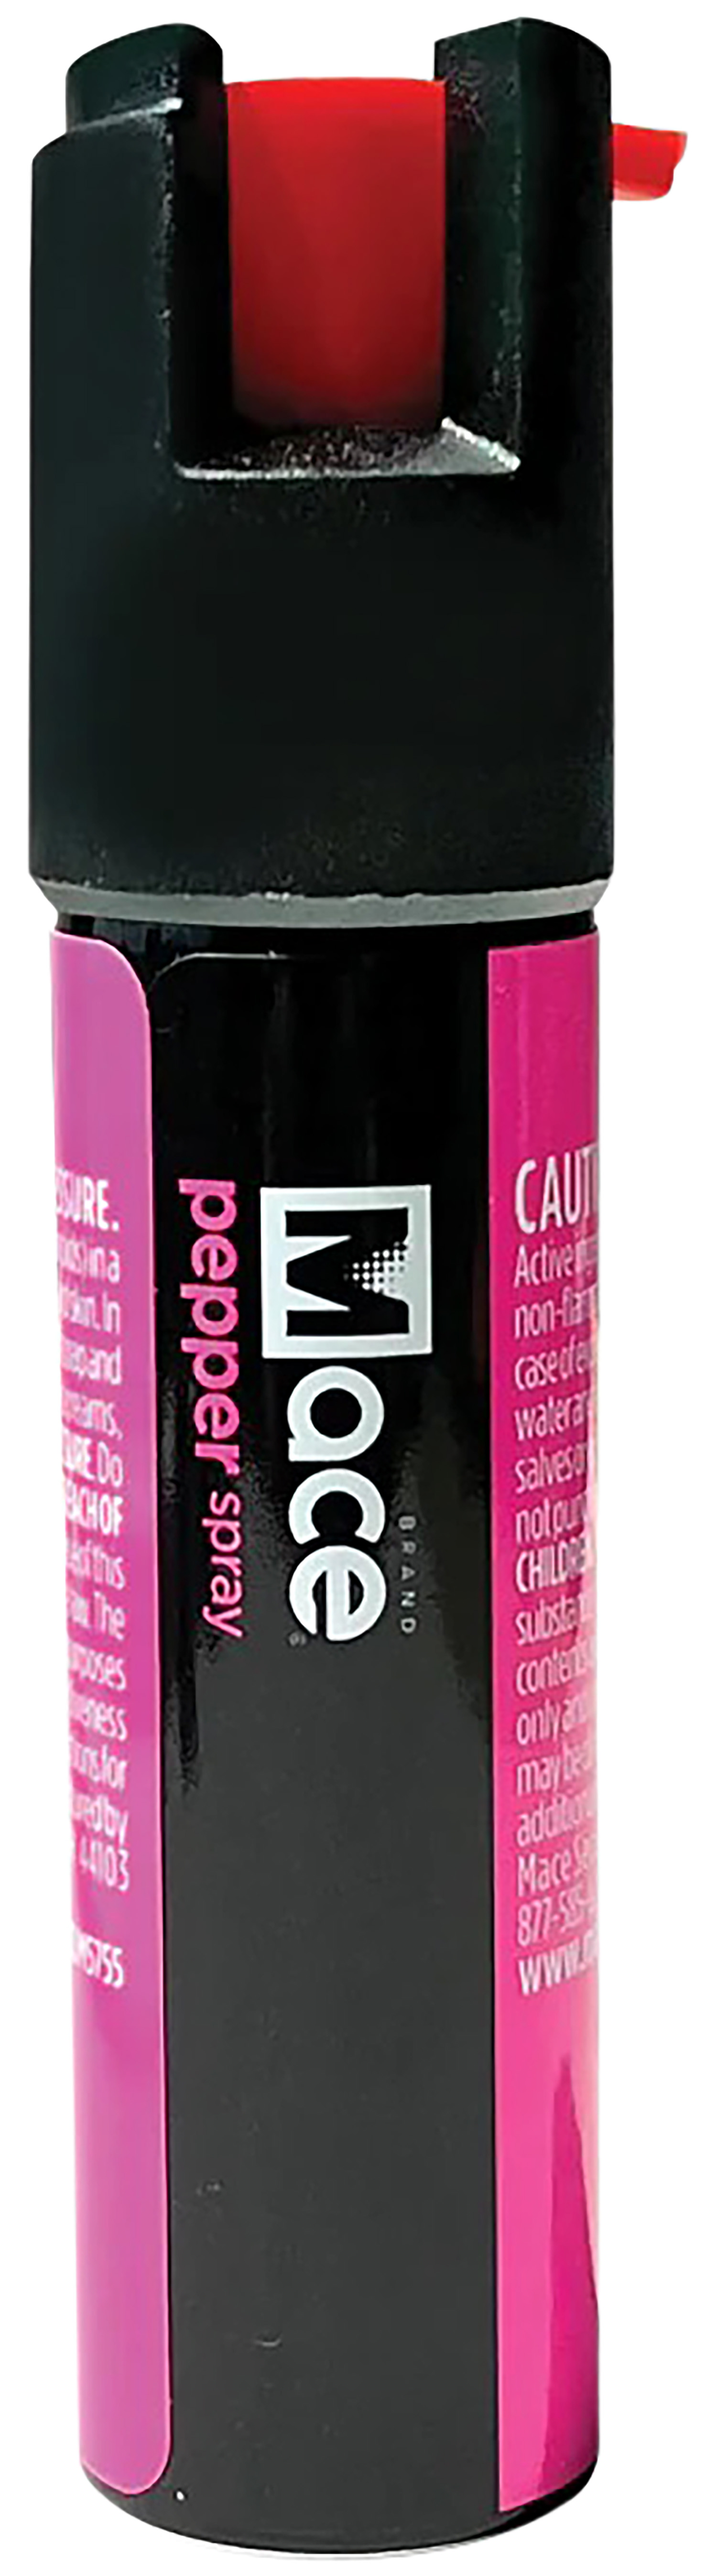 Mace 60011 Twist Lock Pepper Spray OC 15 Bursts Range 10 ft 0.75 Oz Neon Pink